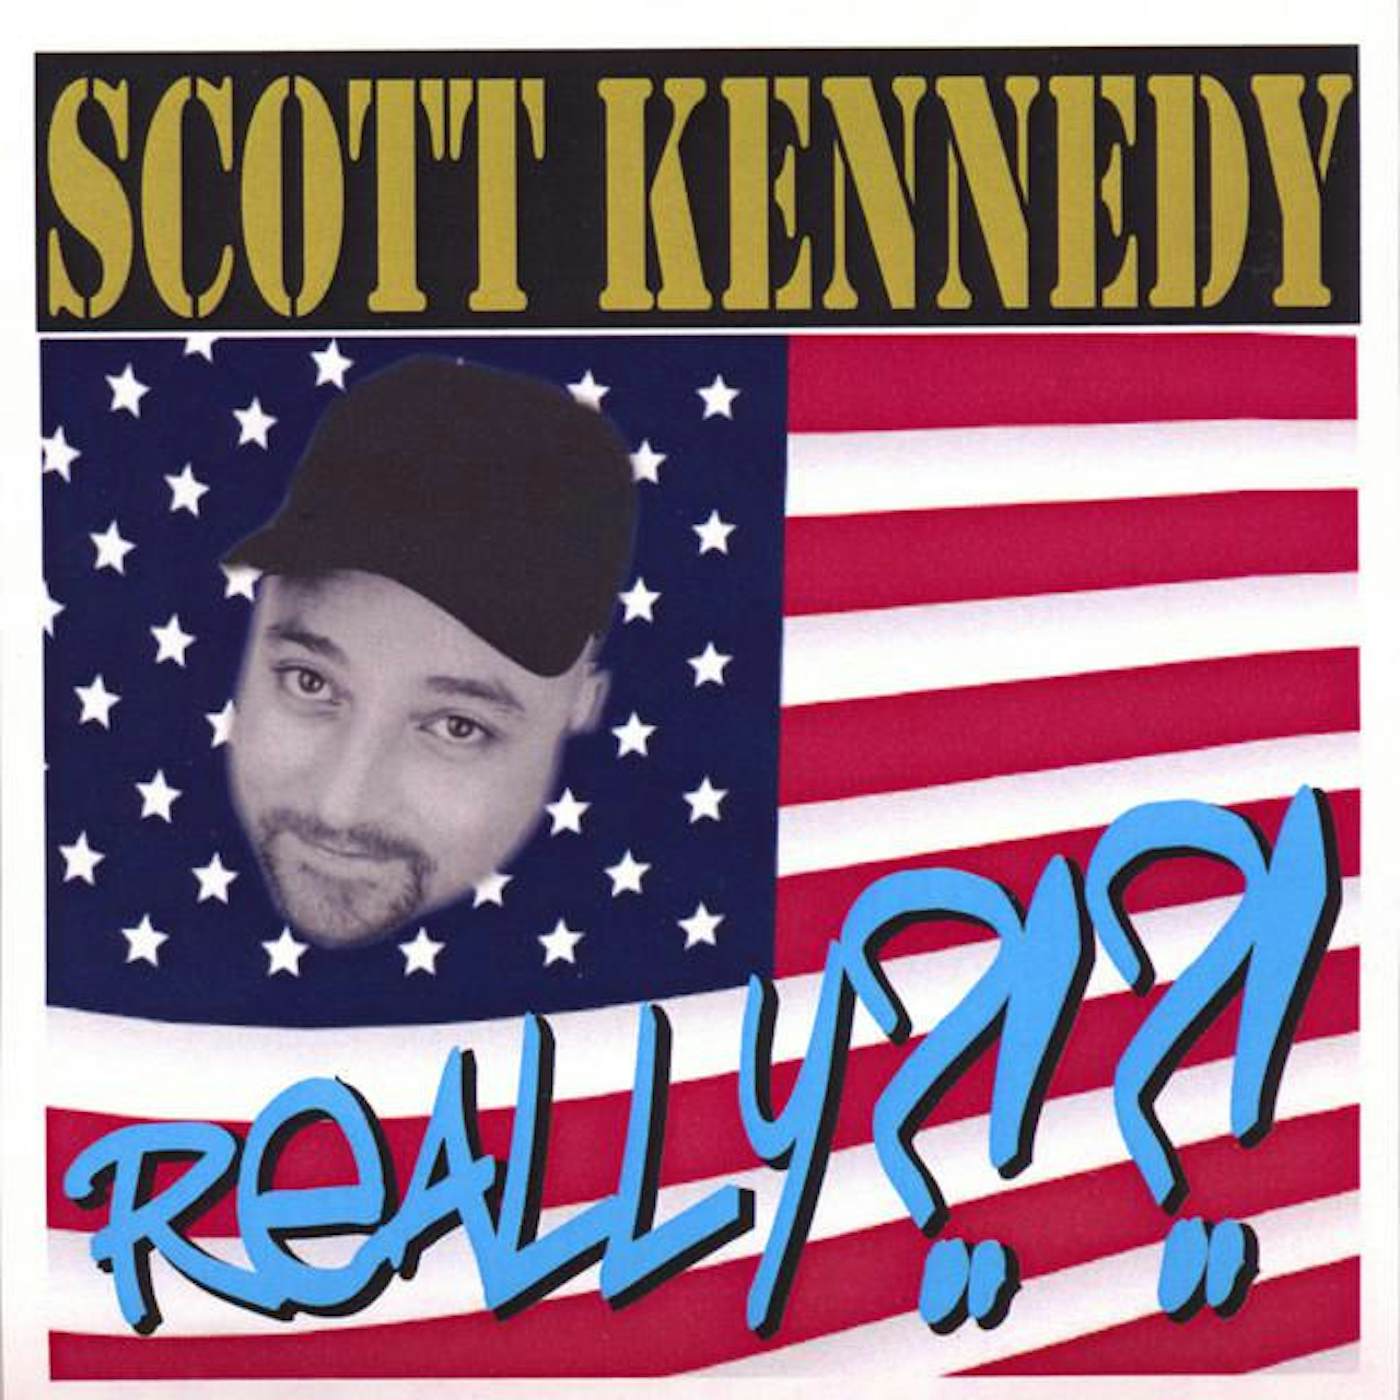 Scott Kennedy